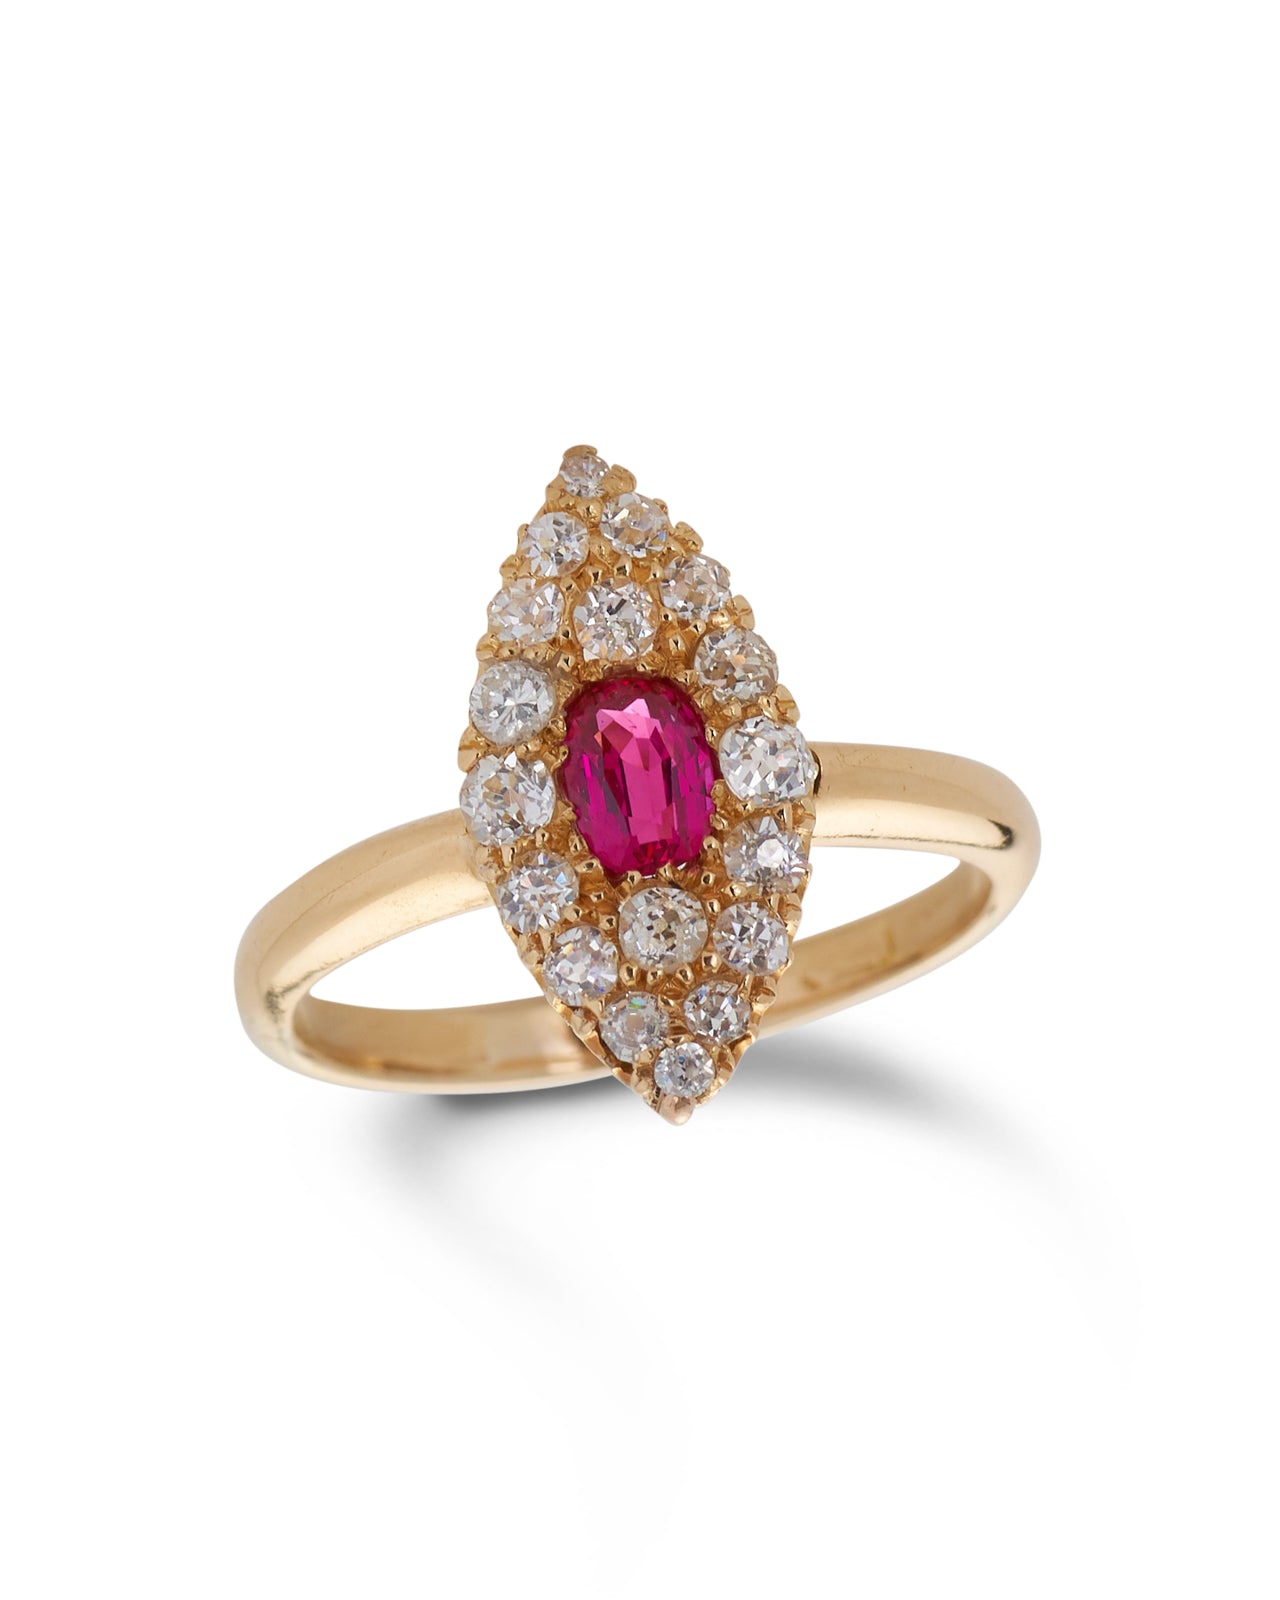 Antique Victorian Ruby & Diamond Ring